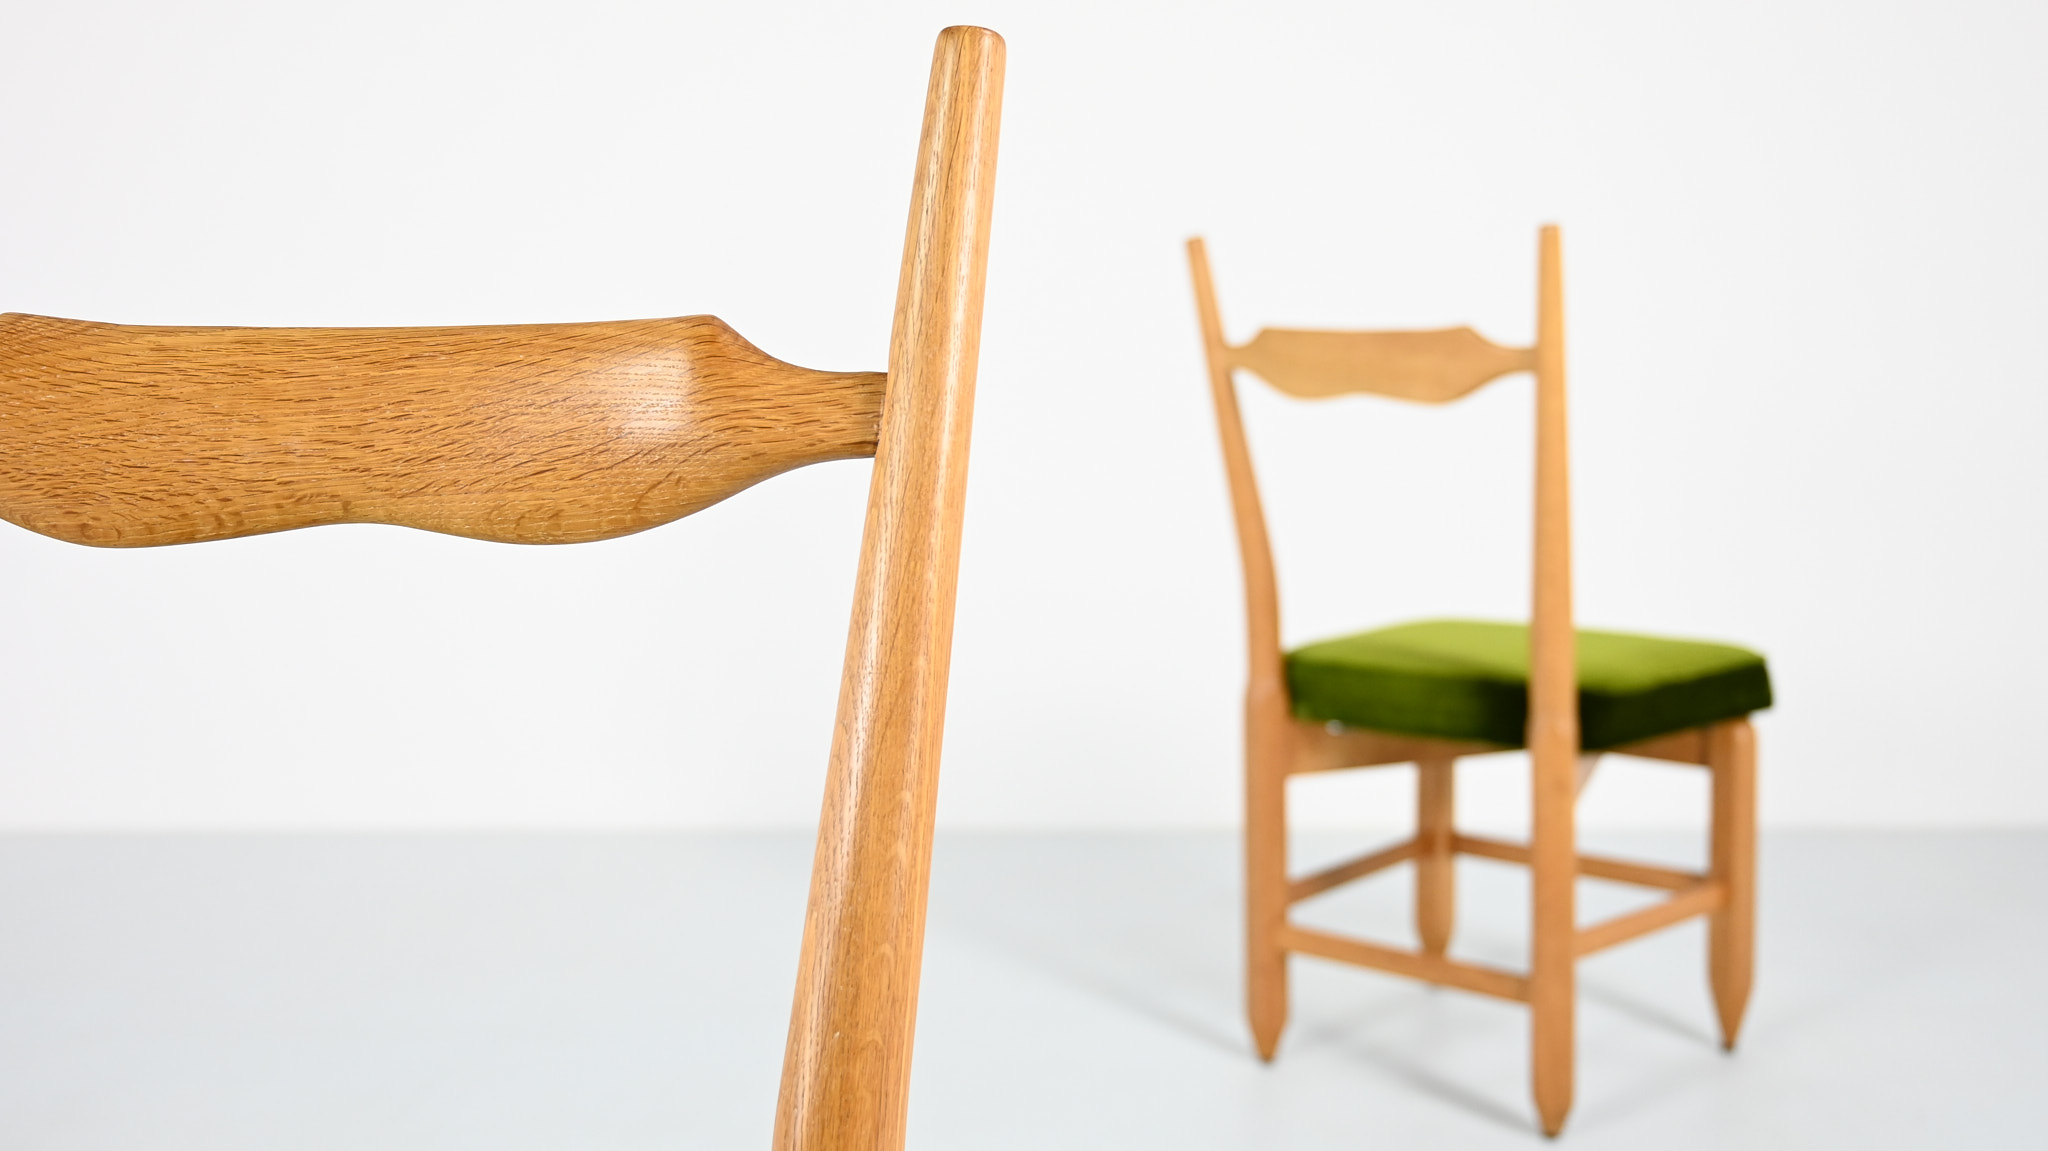 robert guillerme & jacques chambron votre maison chairs chaises charles vintage france mid century modern oak chene